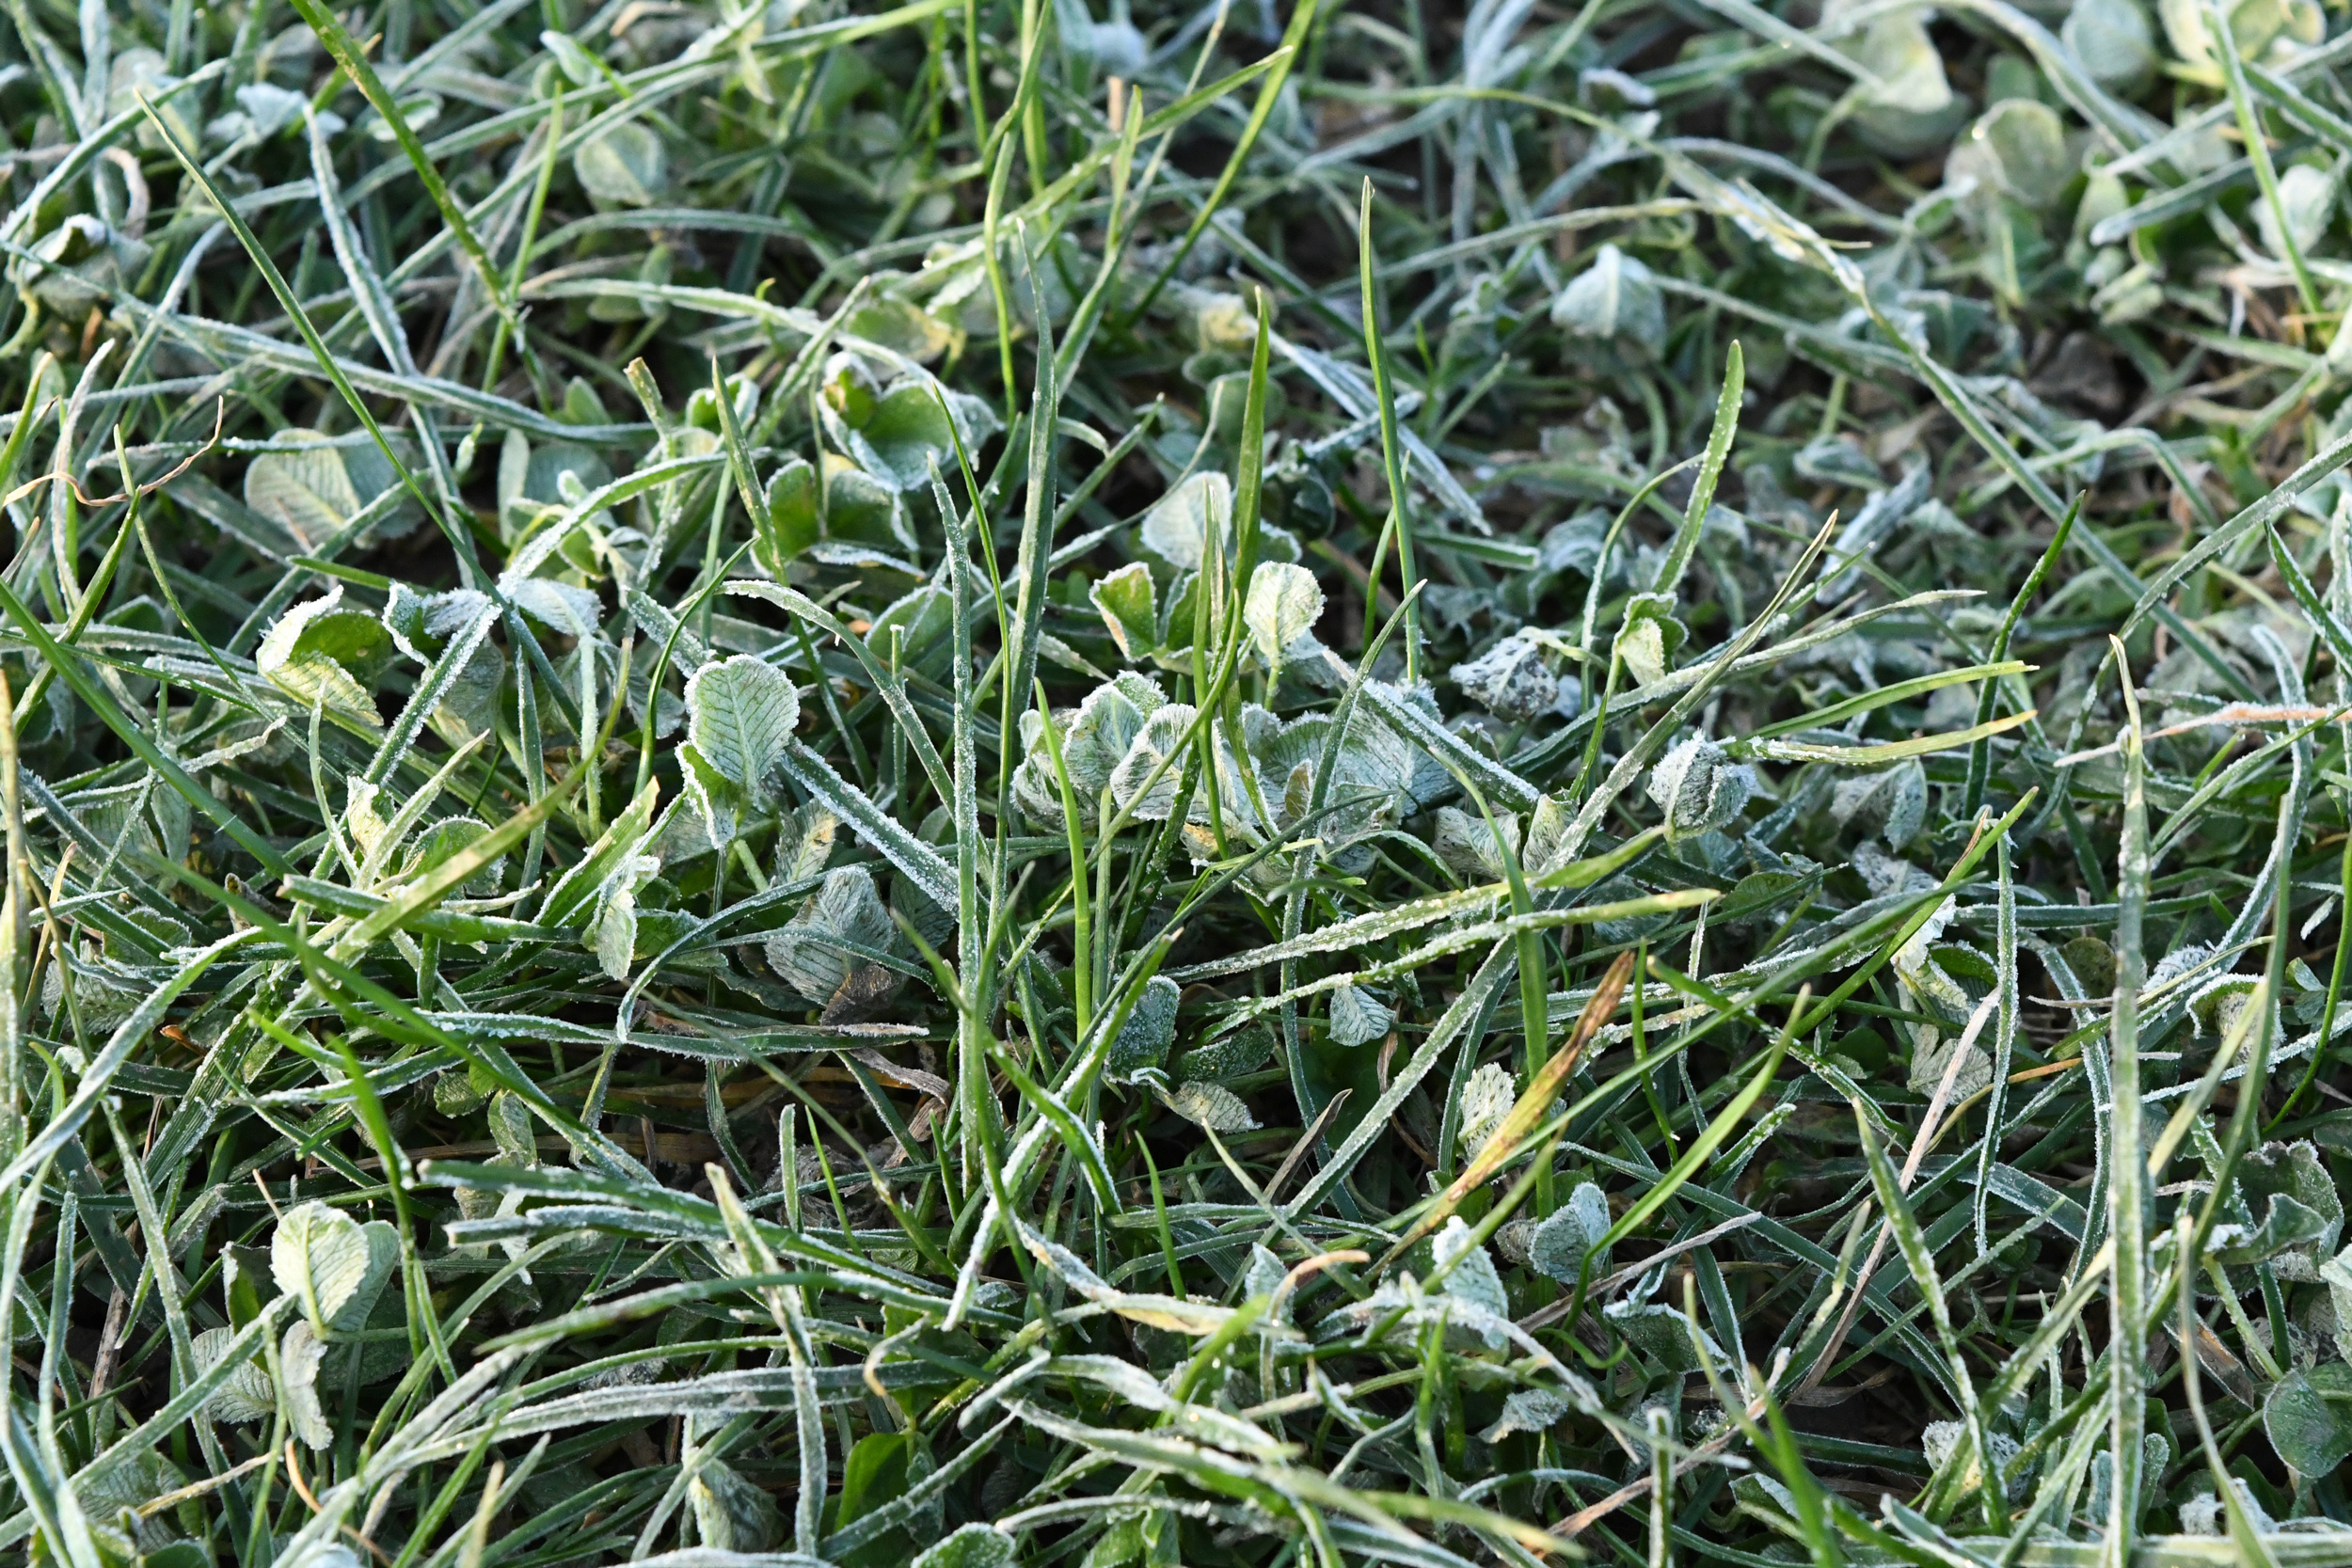 Clover under frost, Prospect Park